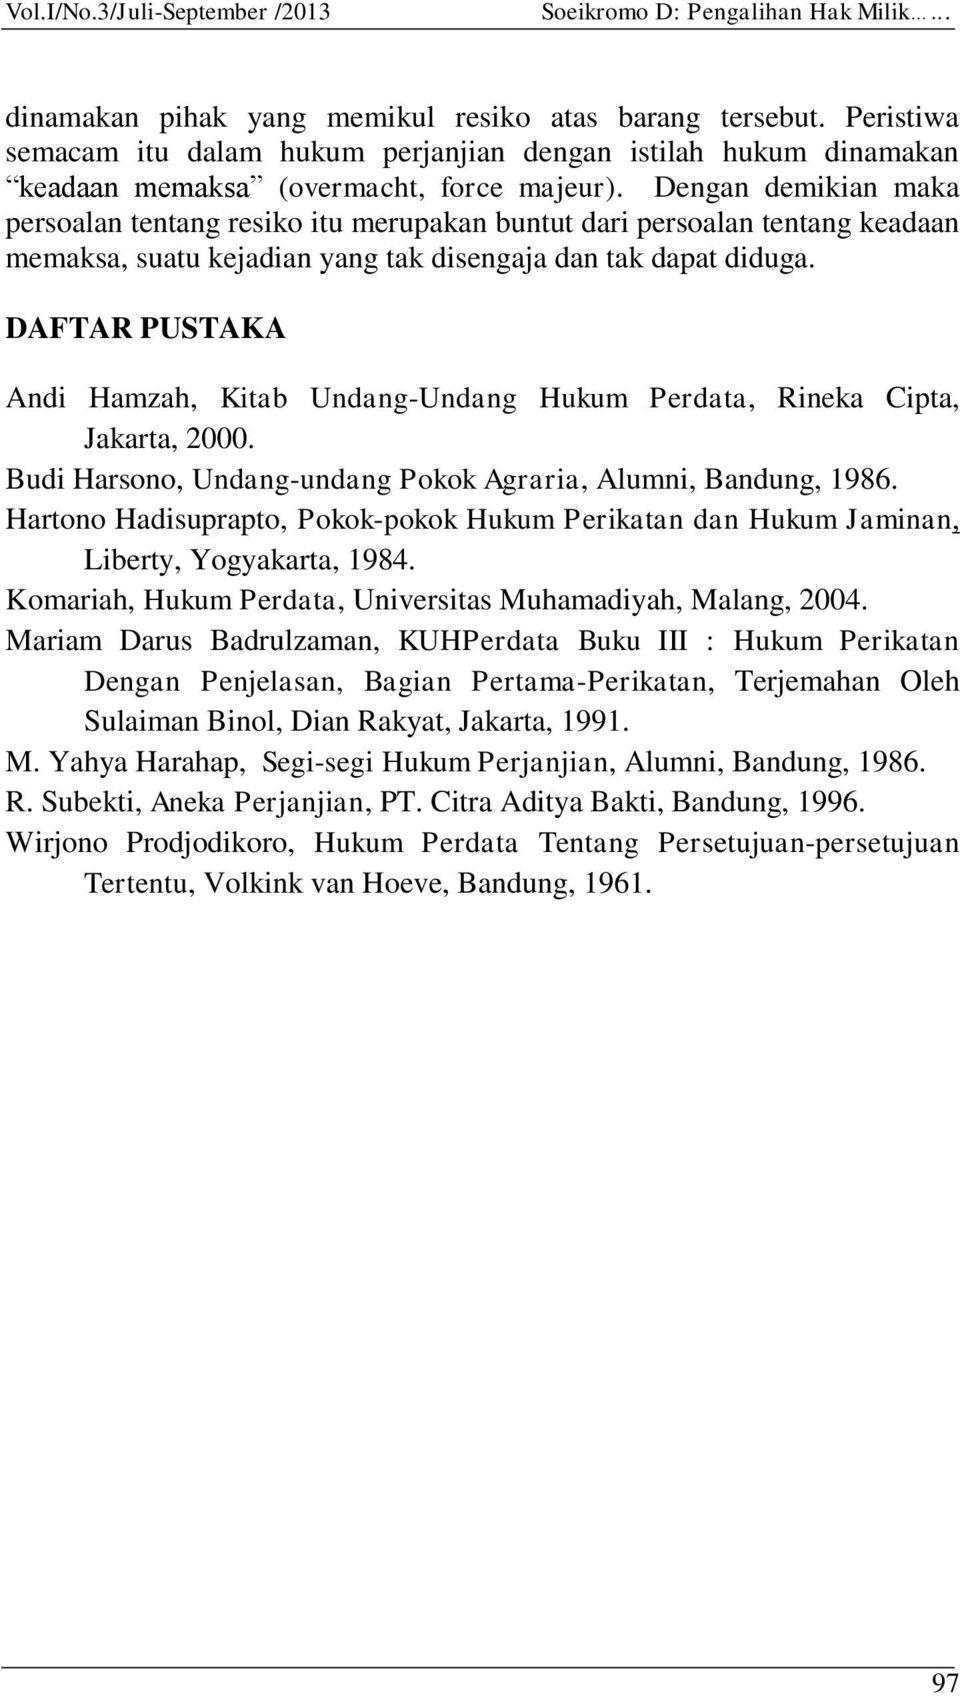 DAFTAR PUSTAKA Andi Hamzah, Kitab Undang-Undang Hukum Perdata, Rineka Cipta, Jakarta, 2000. Budi Harsono, Undang-undang Pokok Agraria, Alumni, Bandung, 1986.